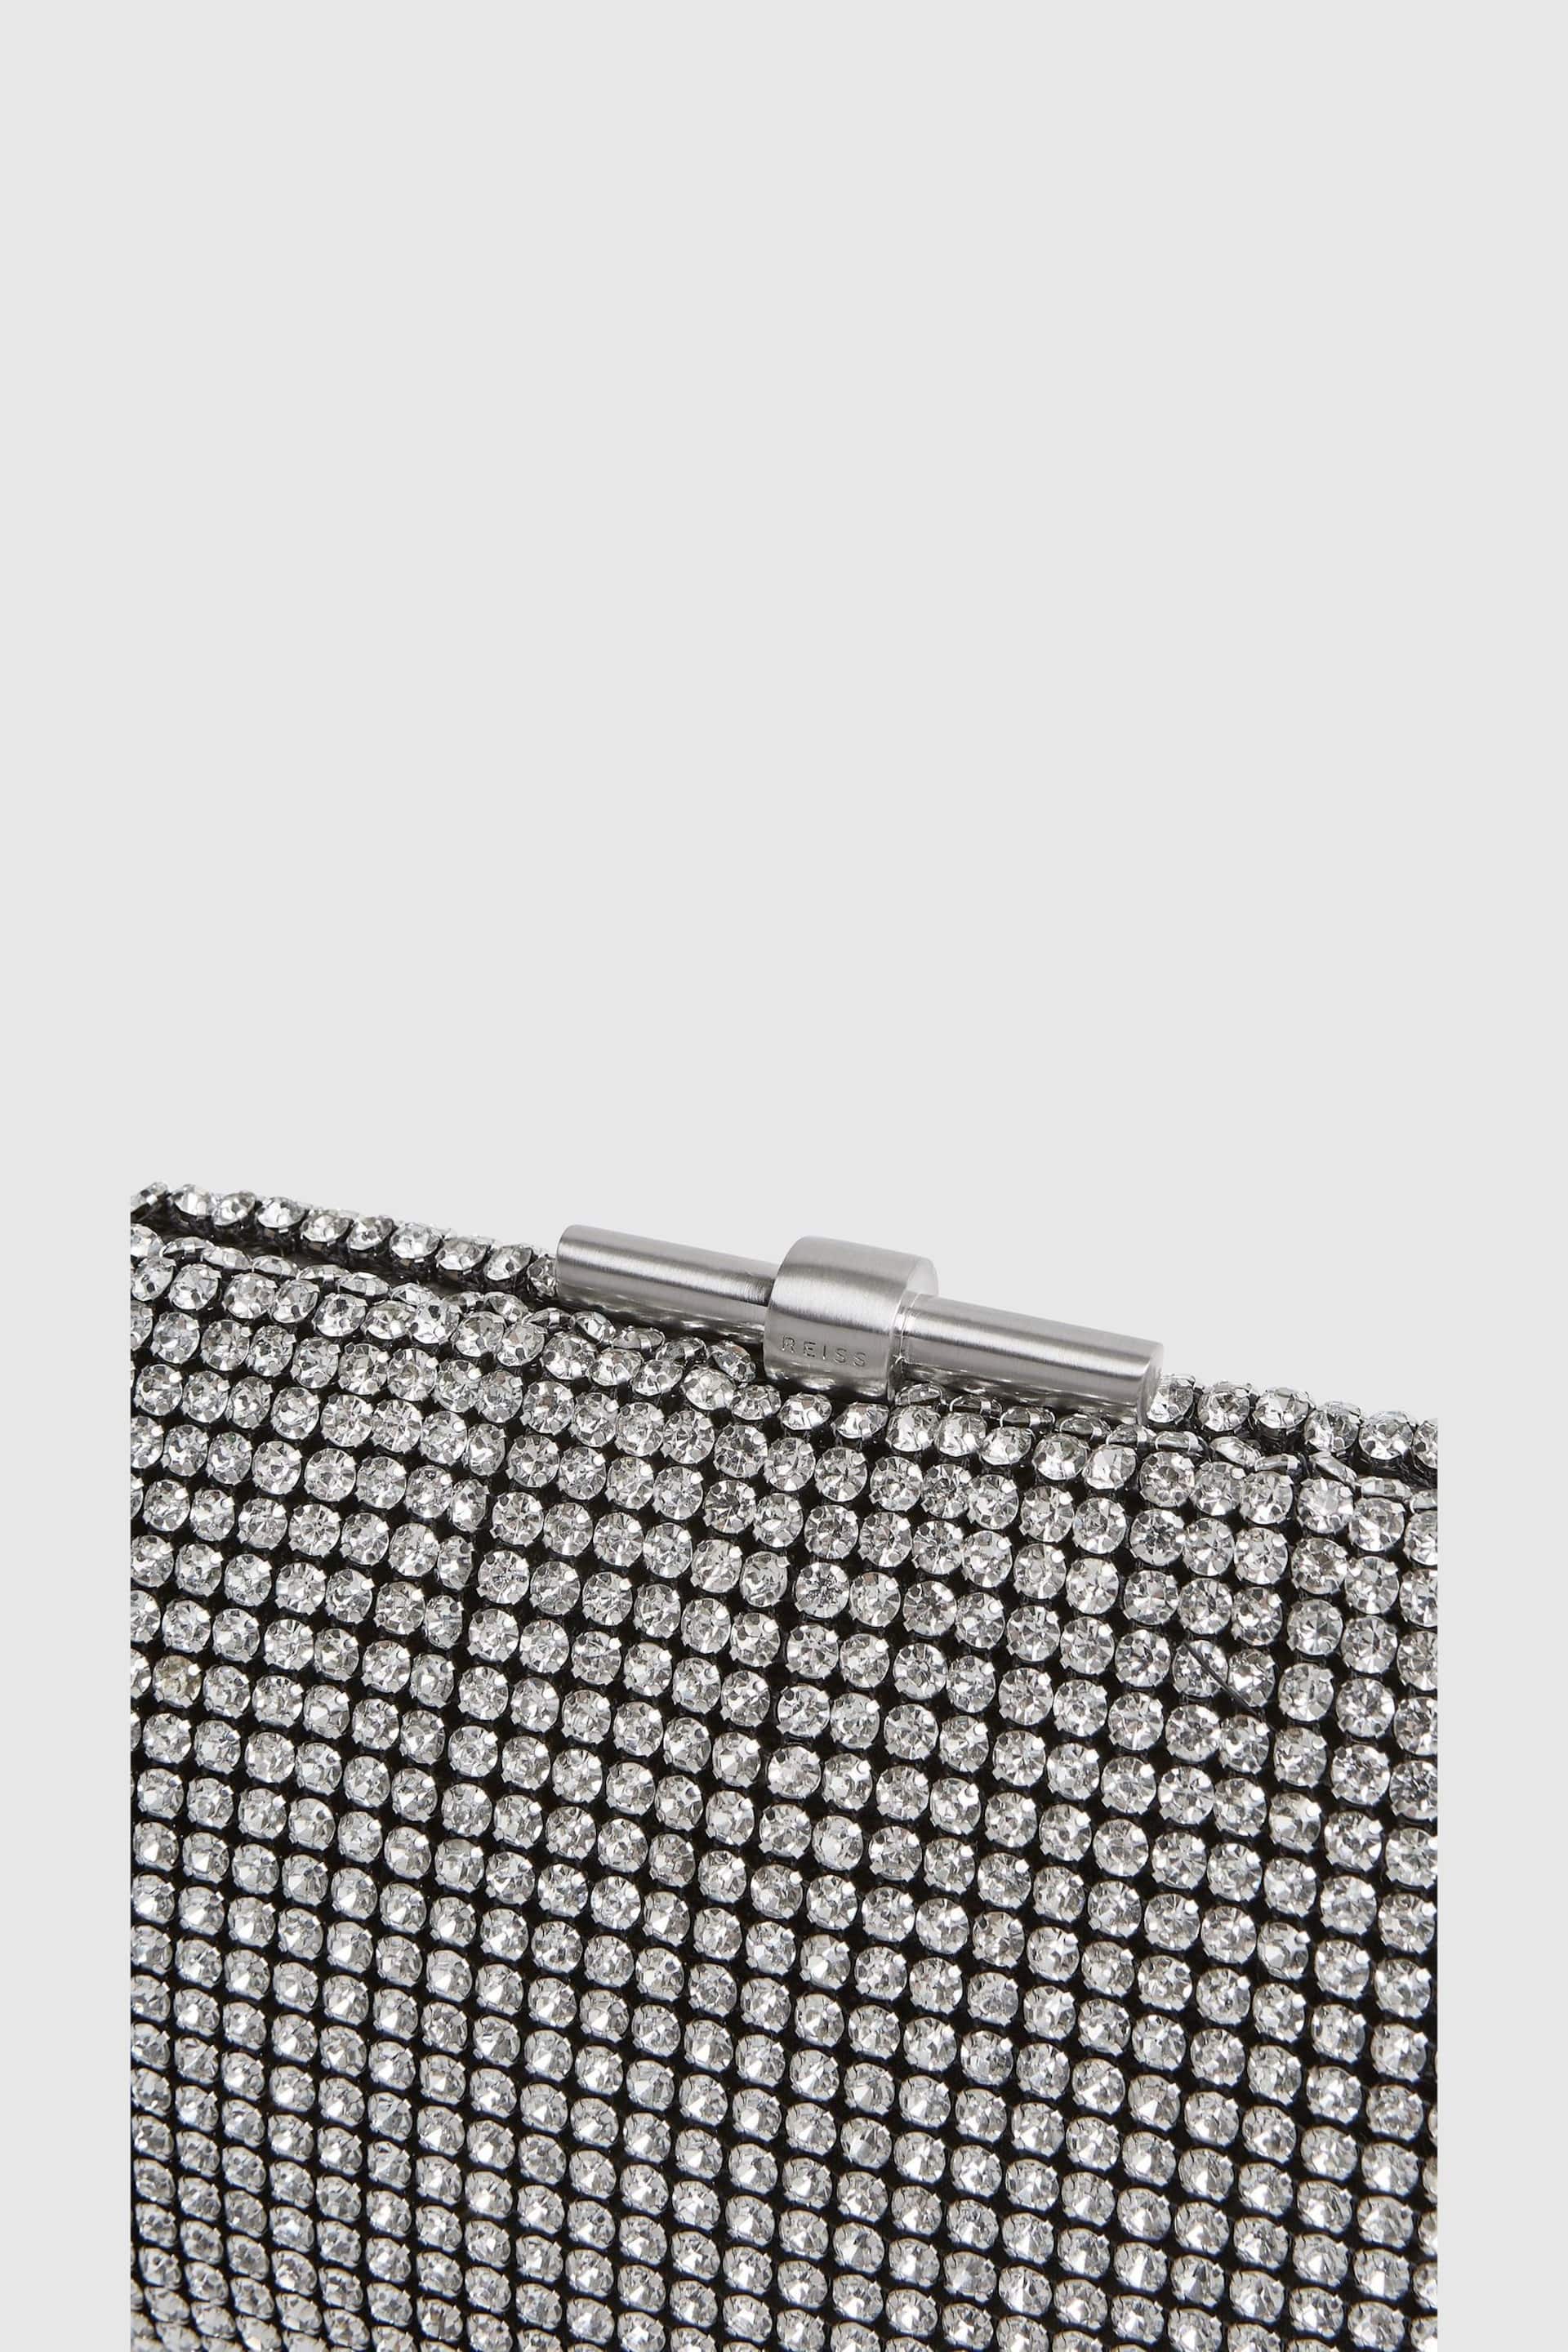 Reiss Silver Adaline Embellished Clutch Bag - Image 6 of 6